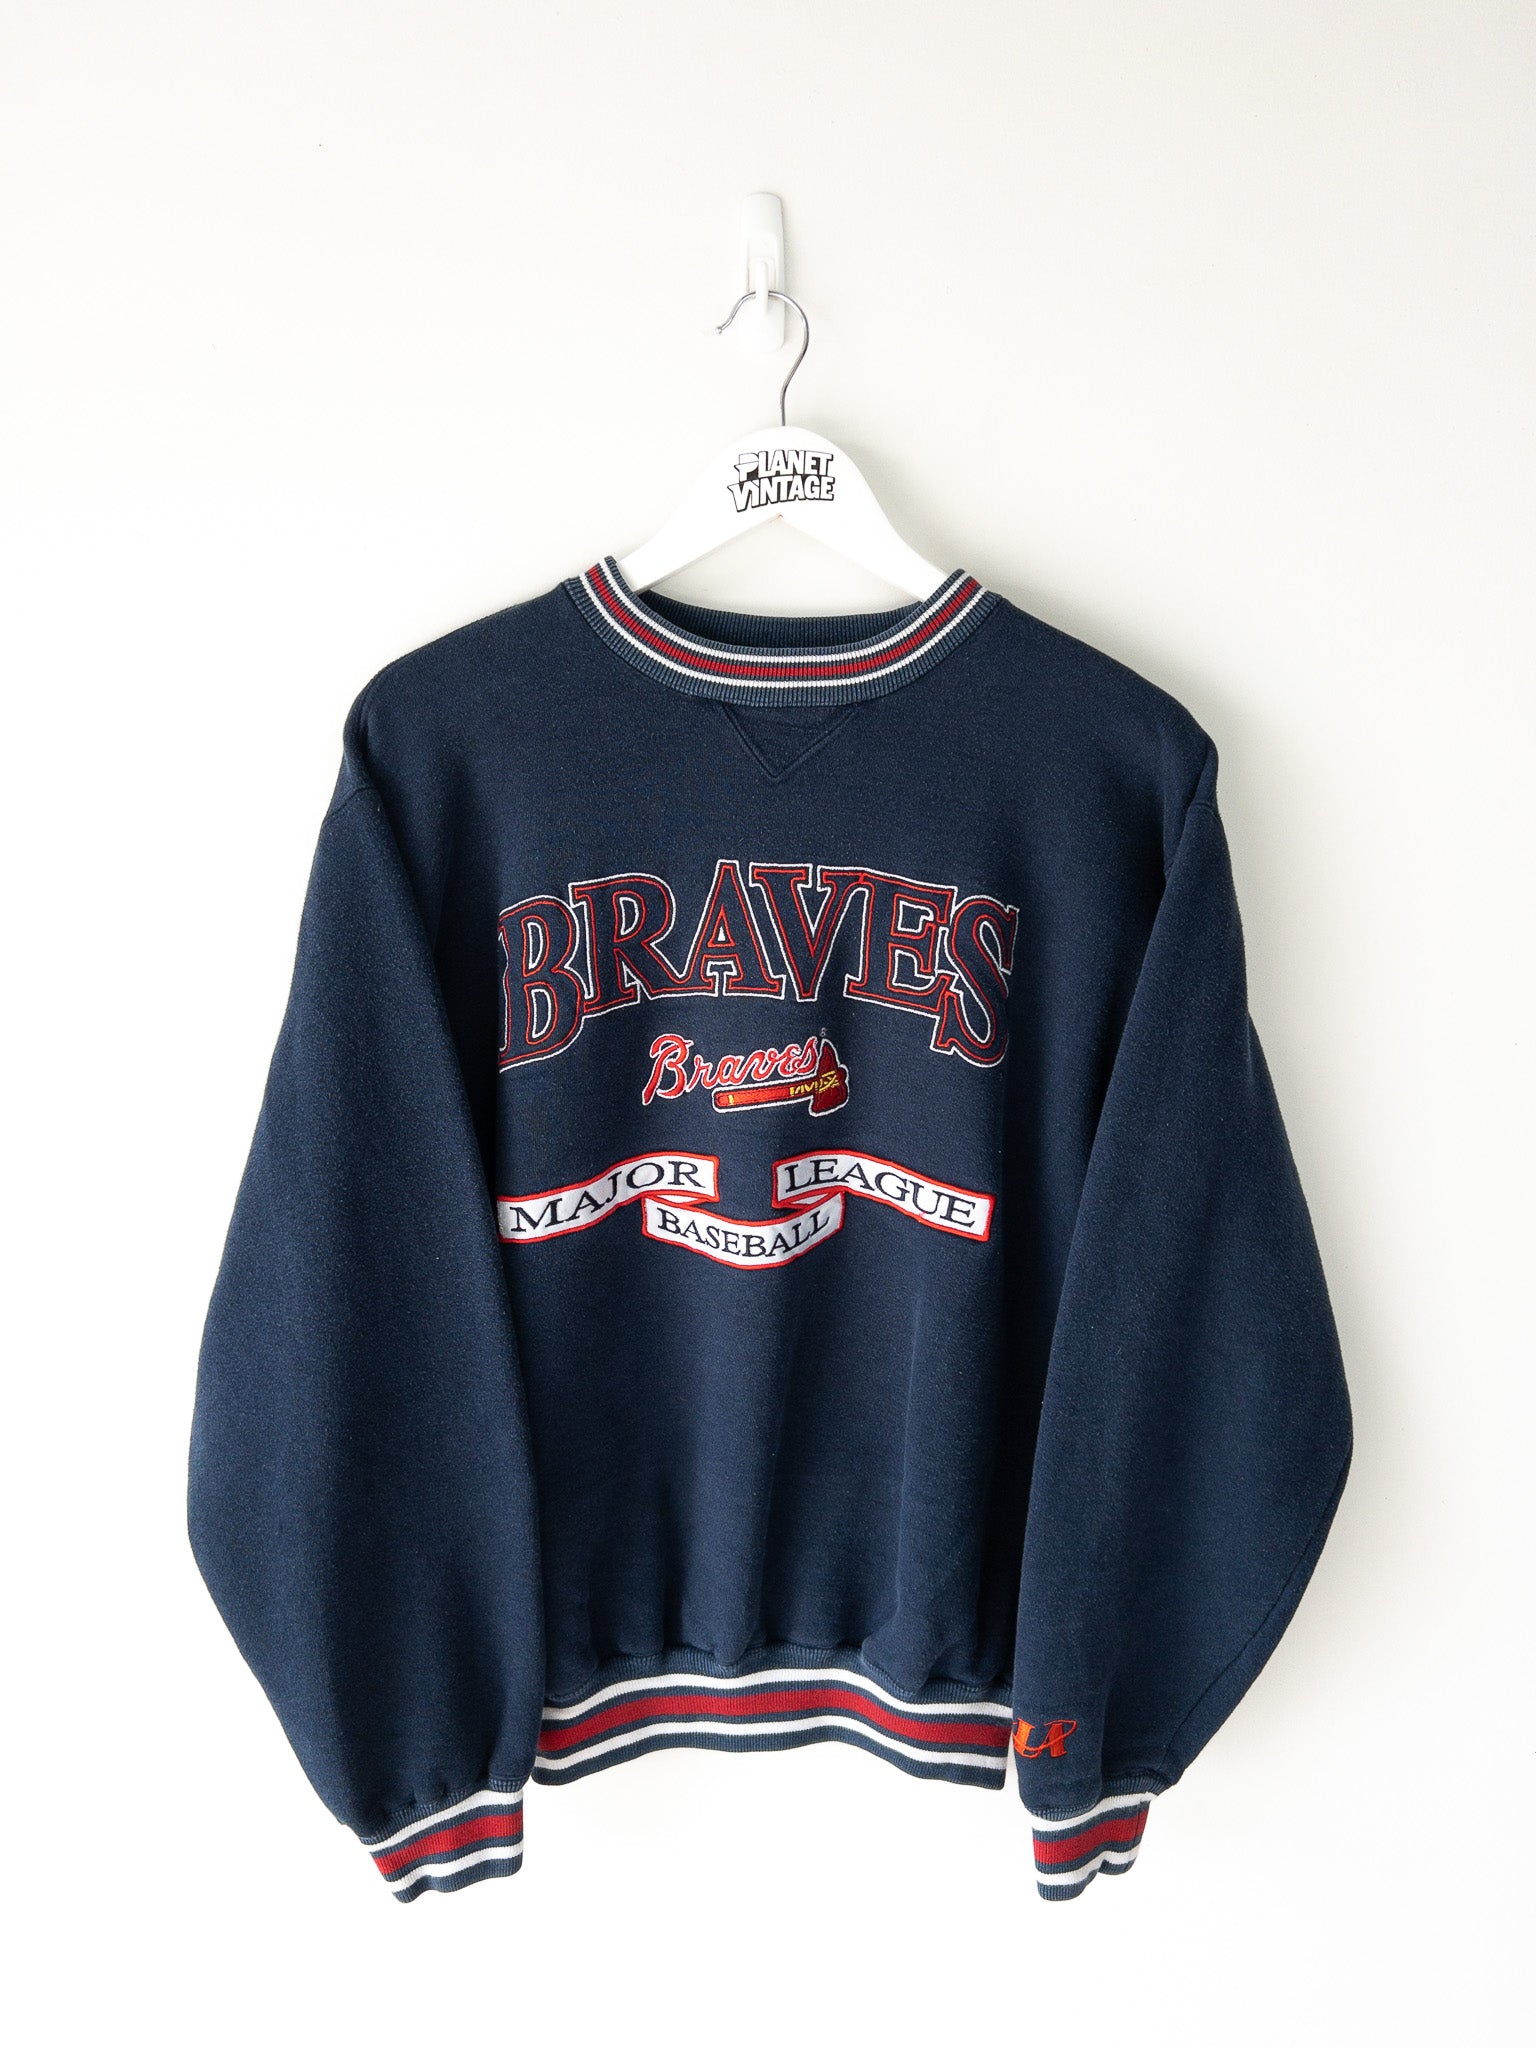 Vintage Atlanta Braves Sweatshirt (M)